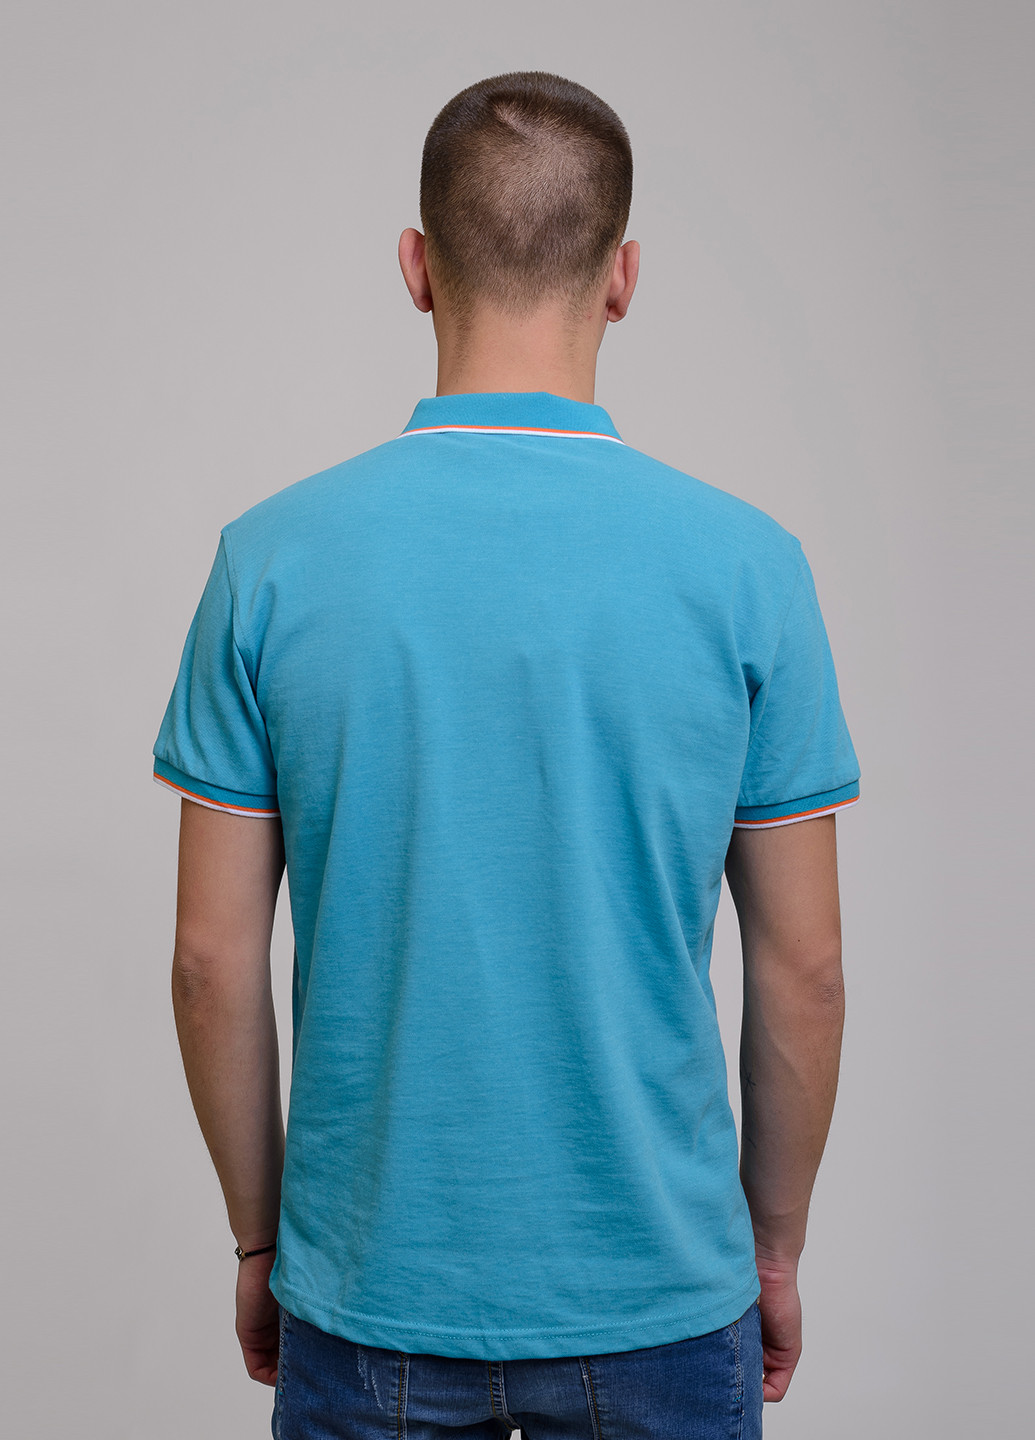 Голубой футболка-поло для мужчин Remix однотонная